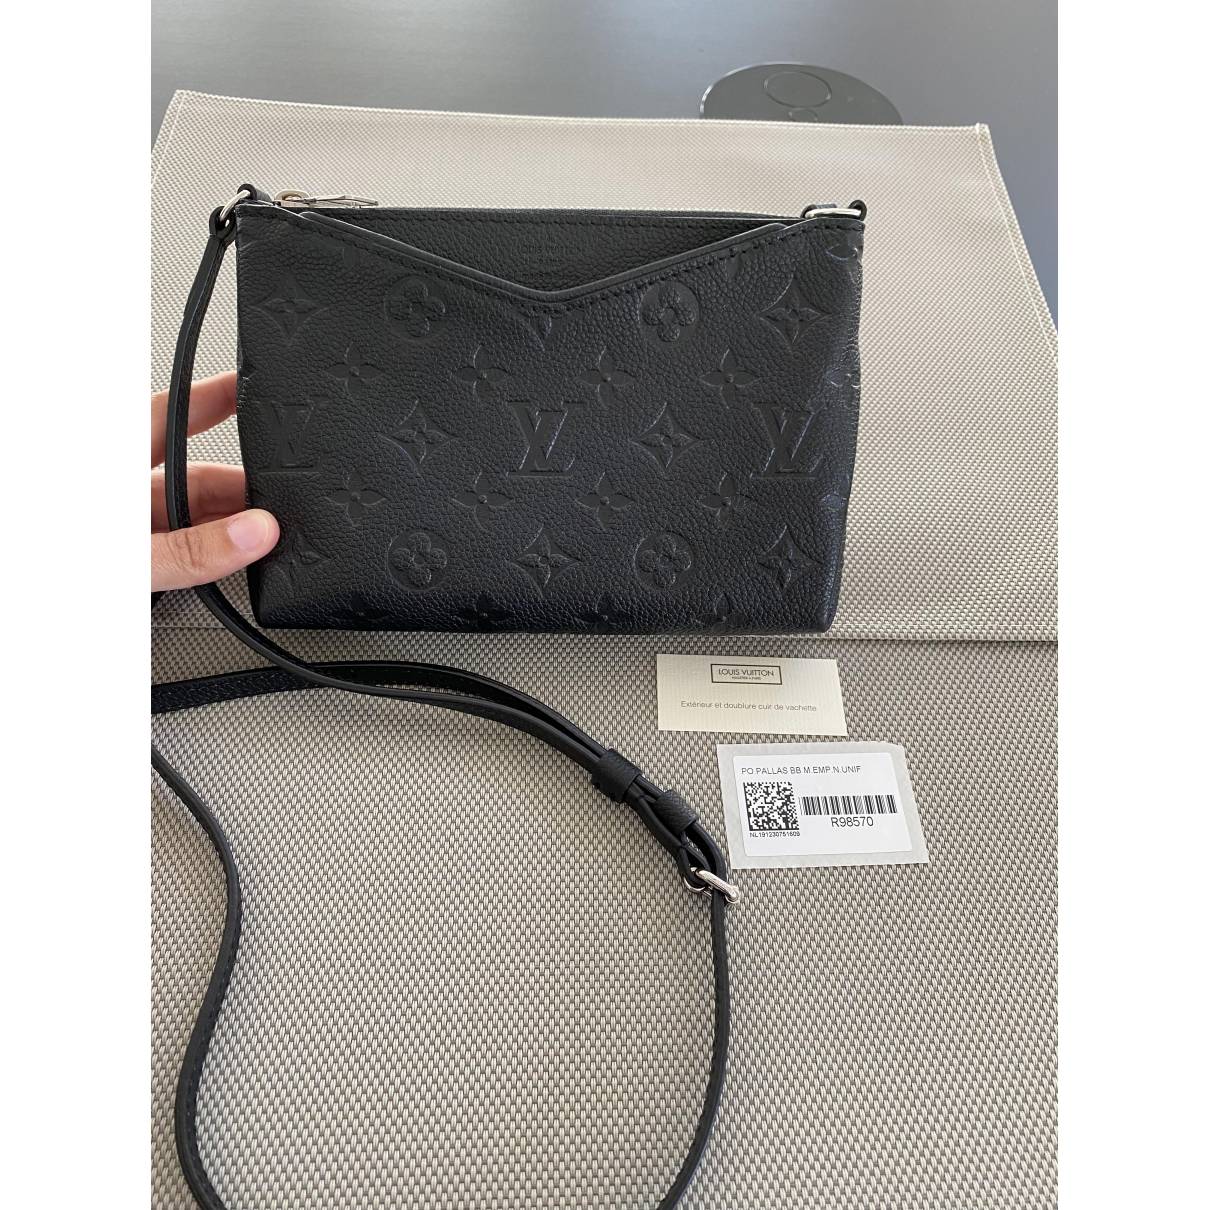 Louis Vuitton crossbody empreinte uniform purse.